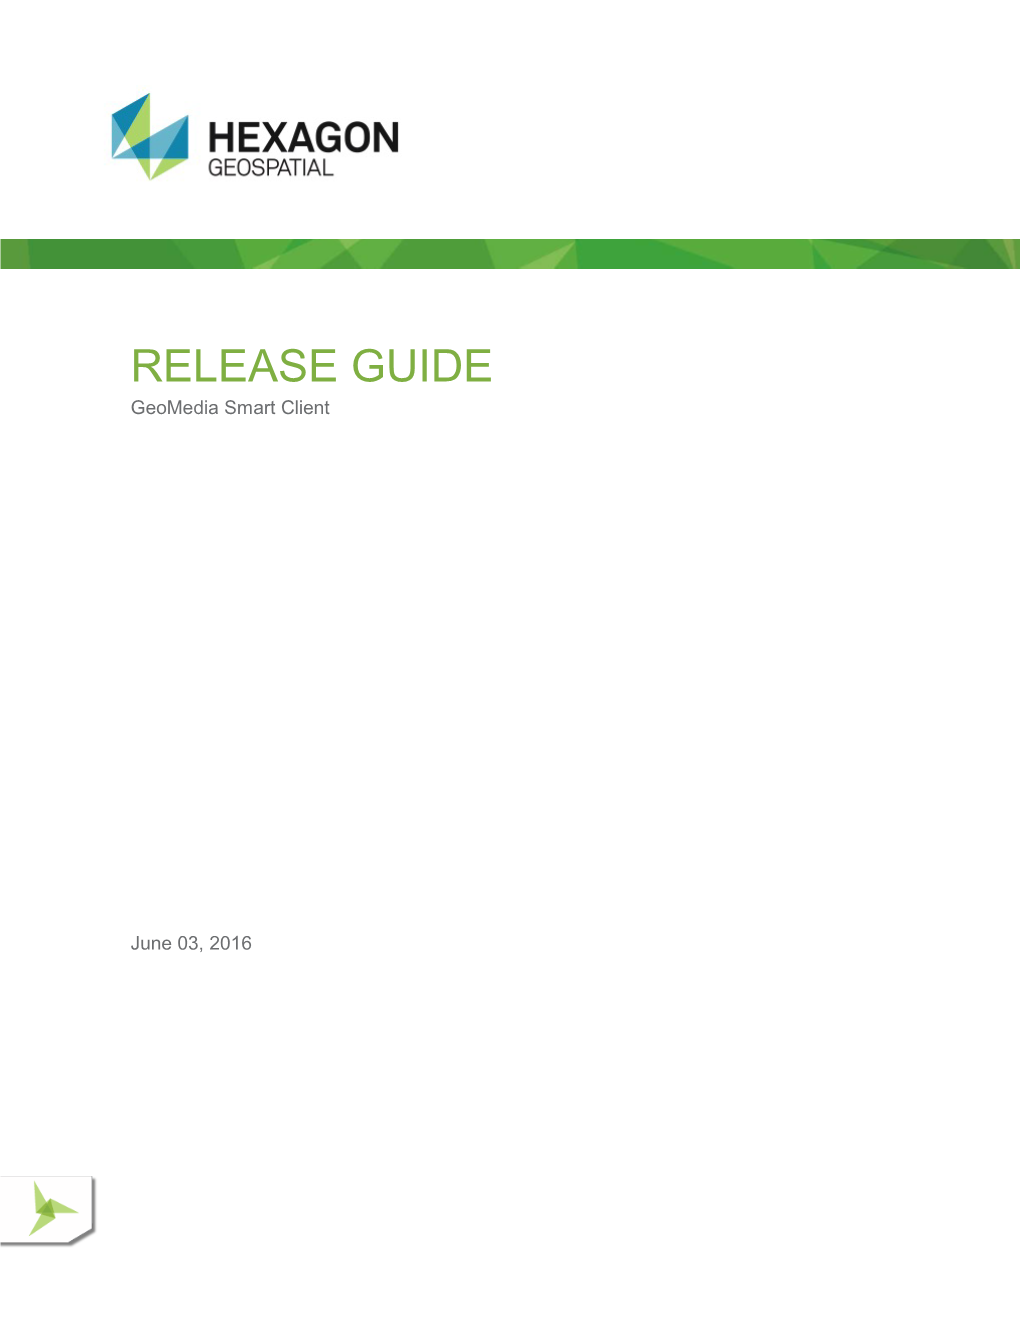 Geomedia Smart Client 2016 Release Guide